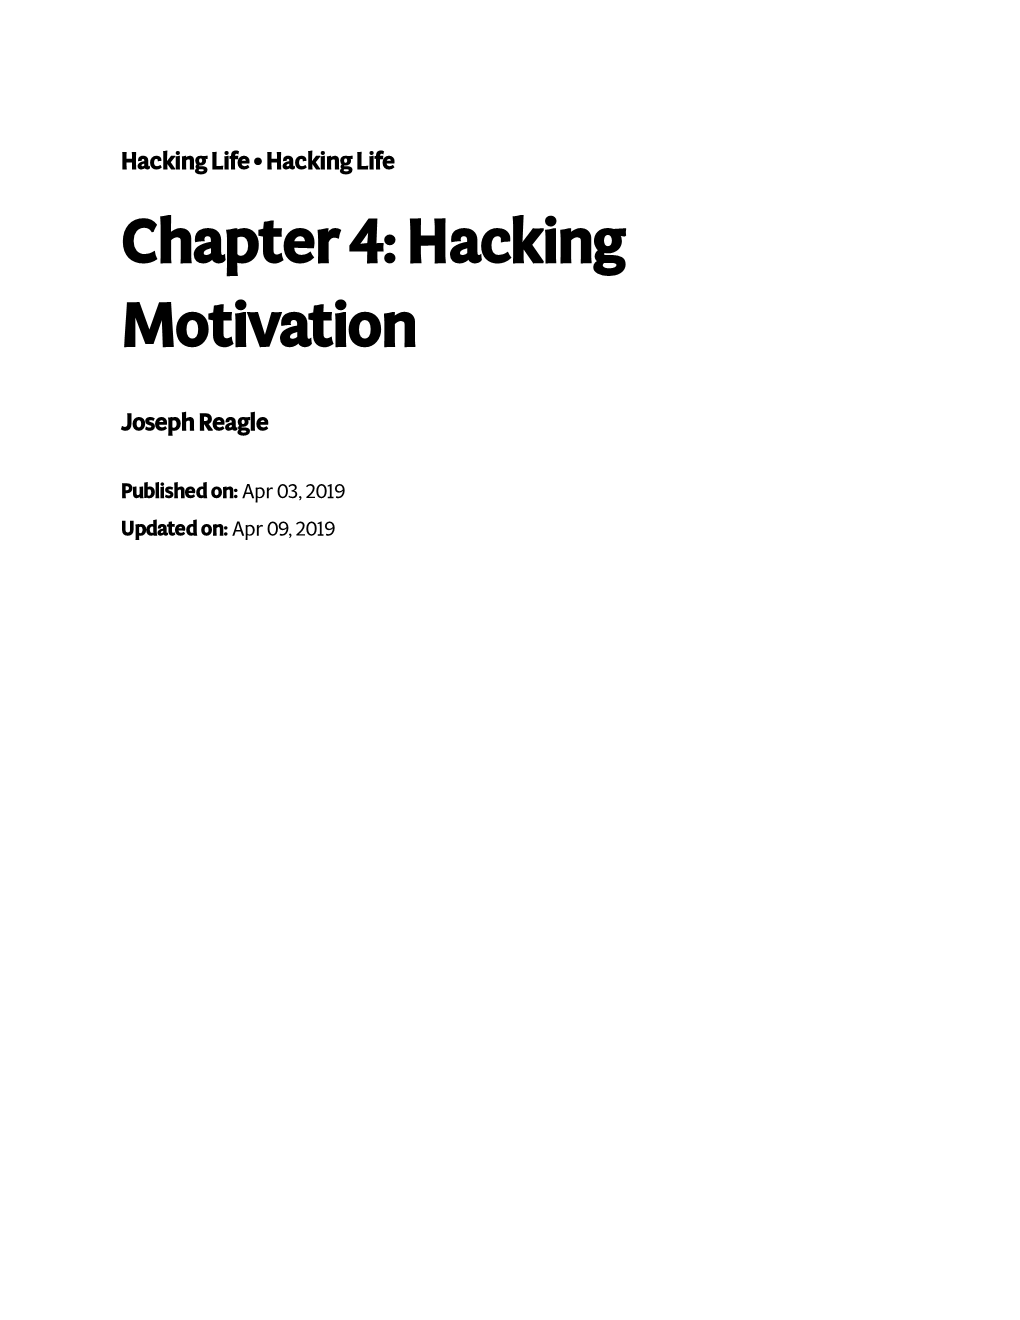 Hacking Motivation